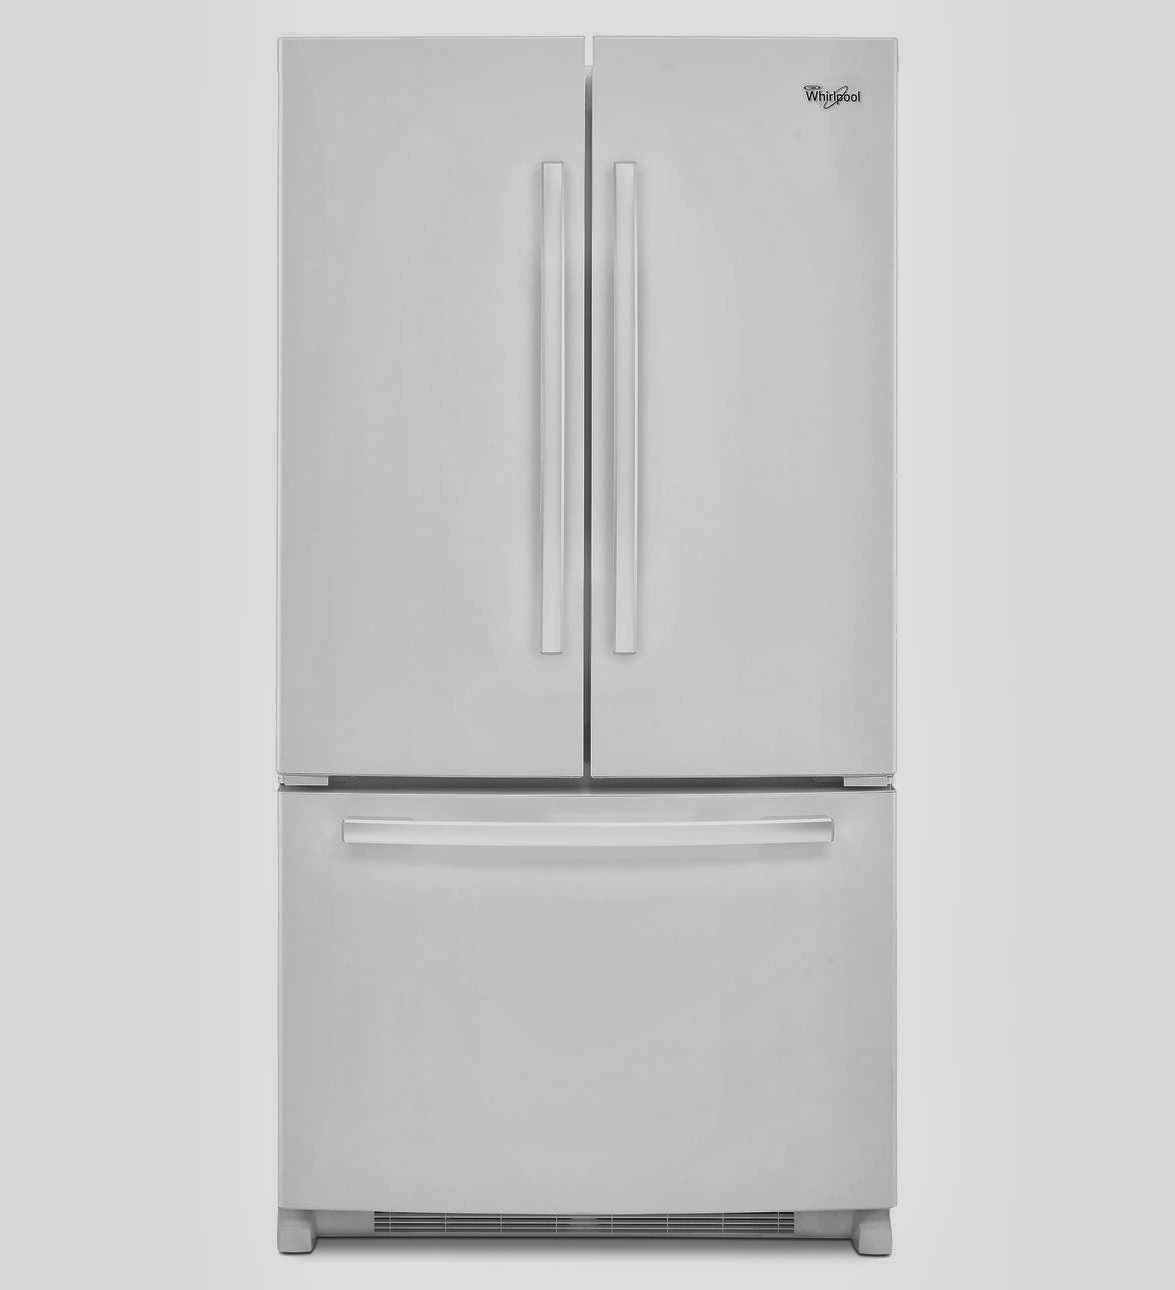 Whirlpool Refrigerator Brand: Whirlpool GX5FHTXVQ Gold Refrigerator